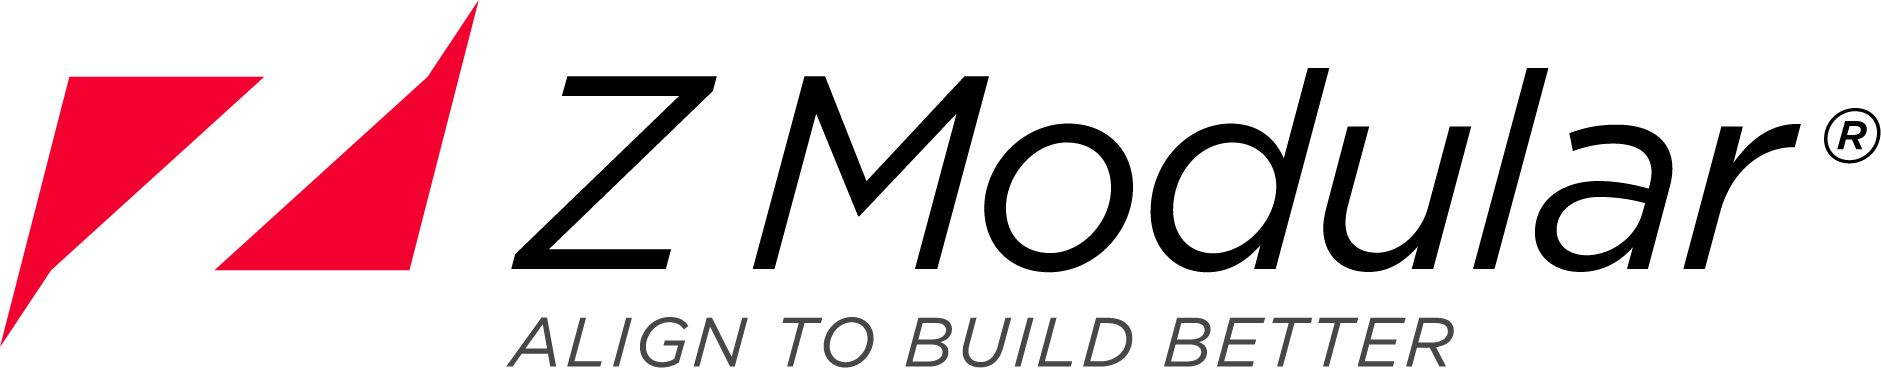 Z-Modular logo